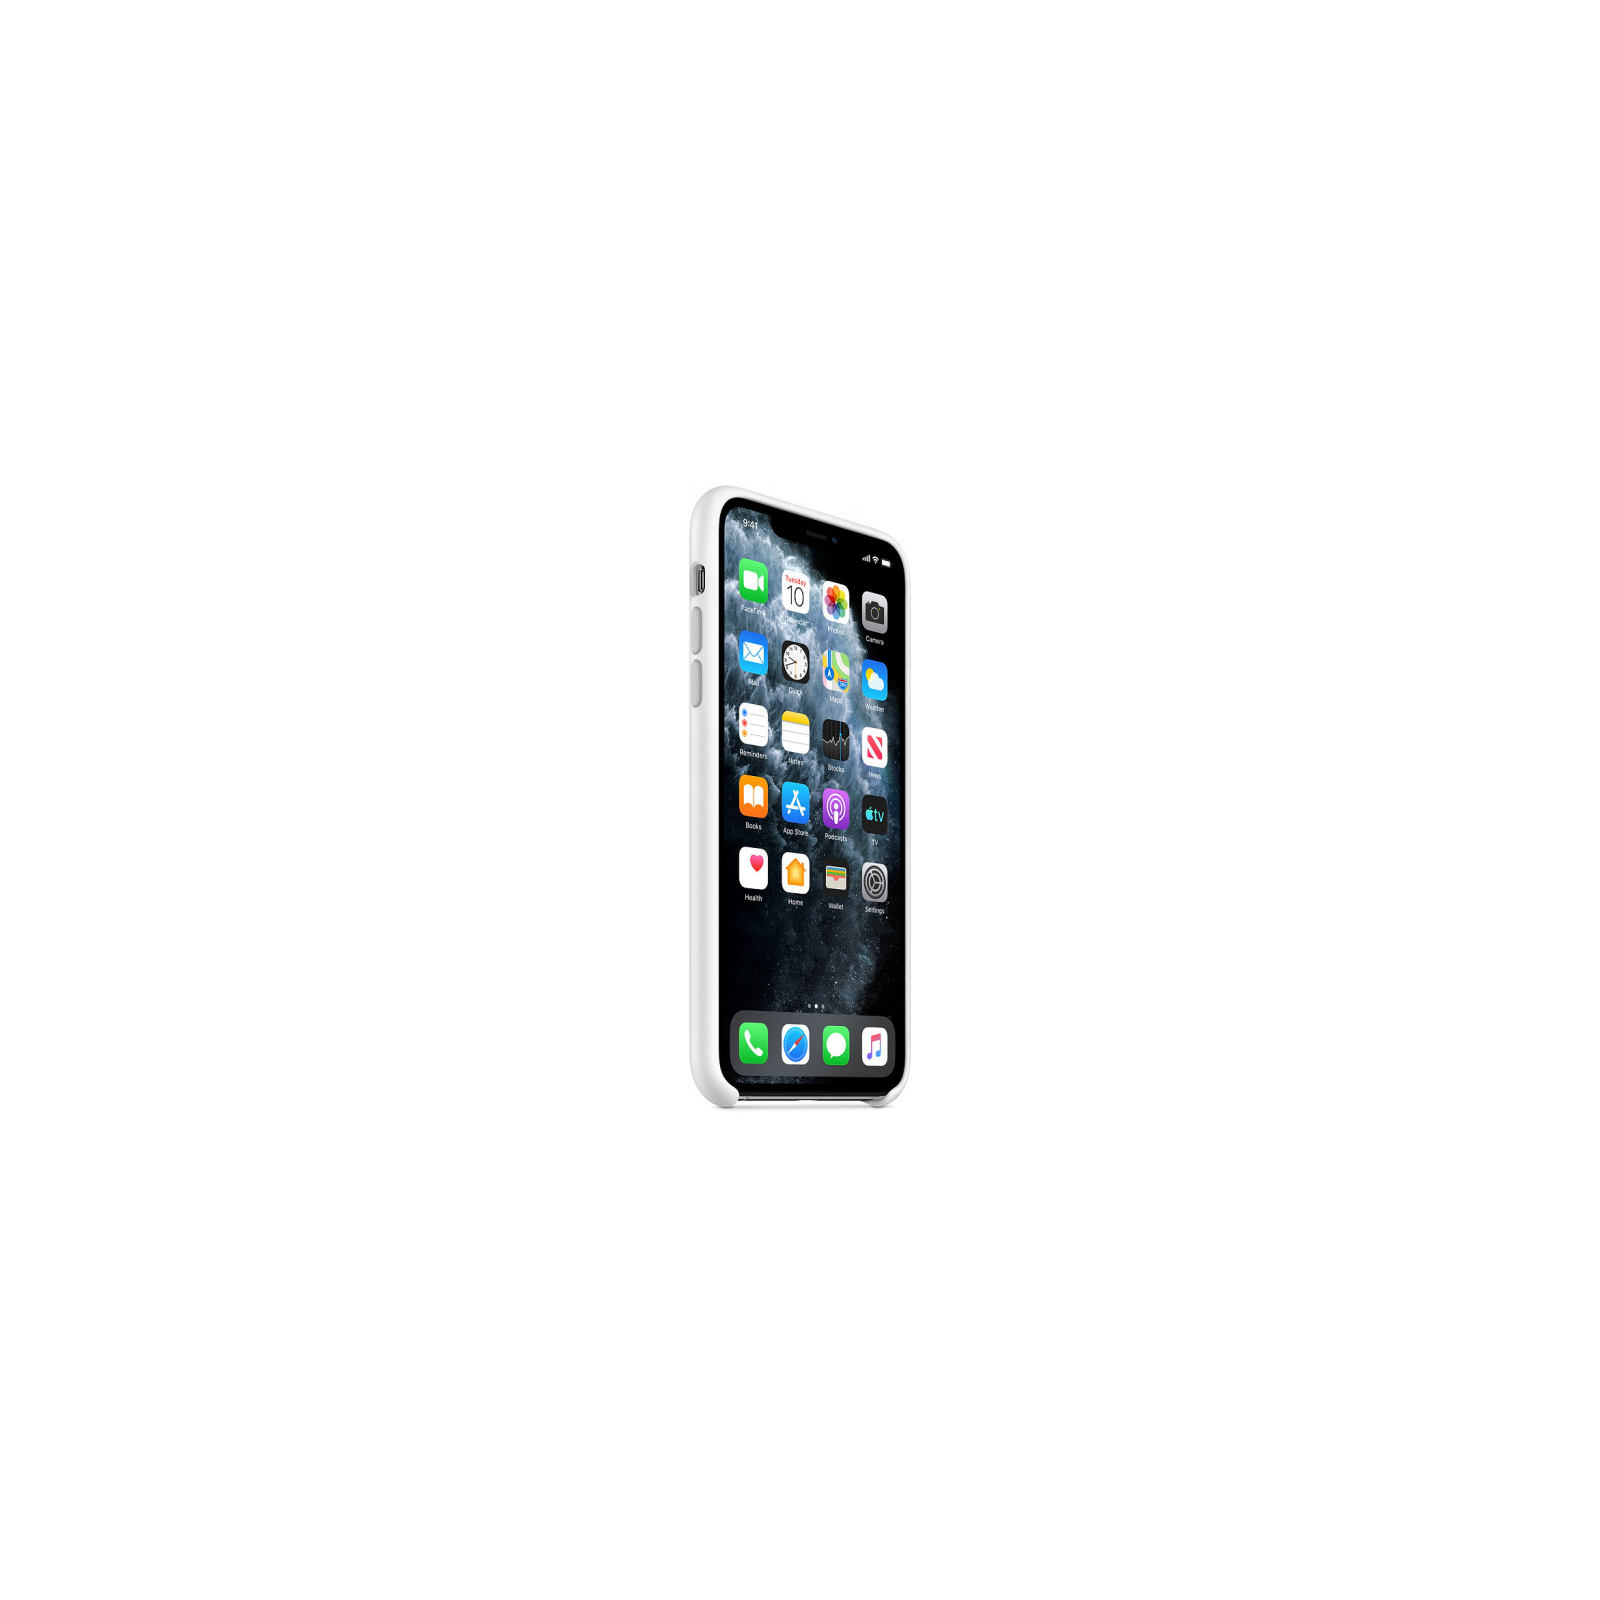 Чехол для мобильного телефона Apple iPhone 11 Pro Max Silicone Case - White (MWYX2ZM/A) изображение 5